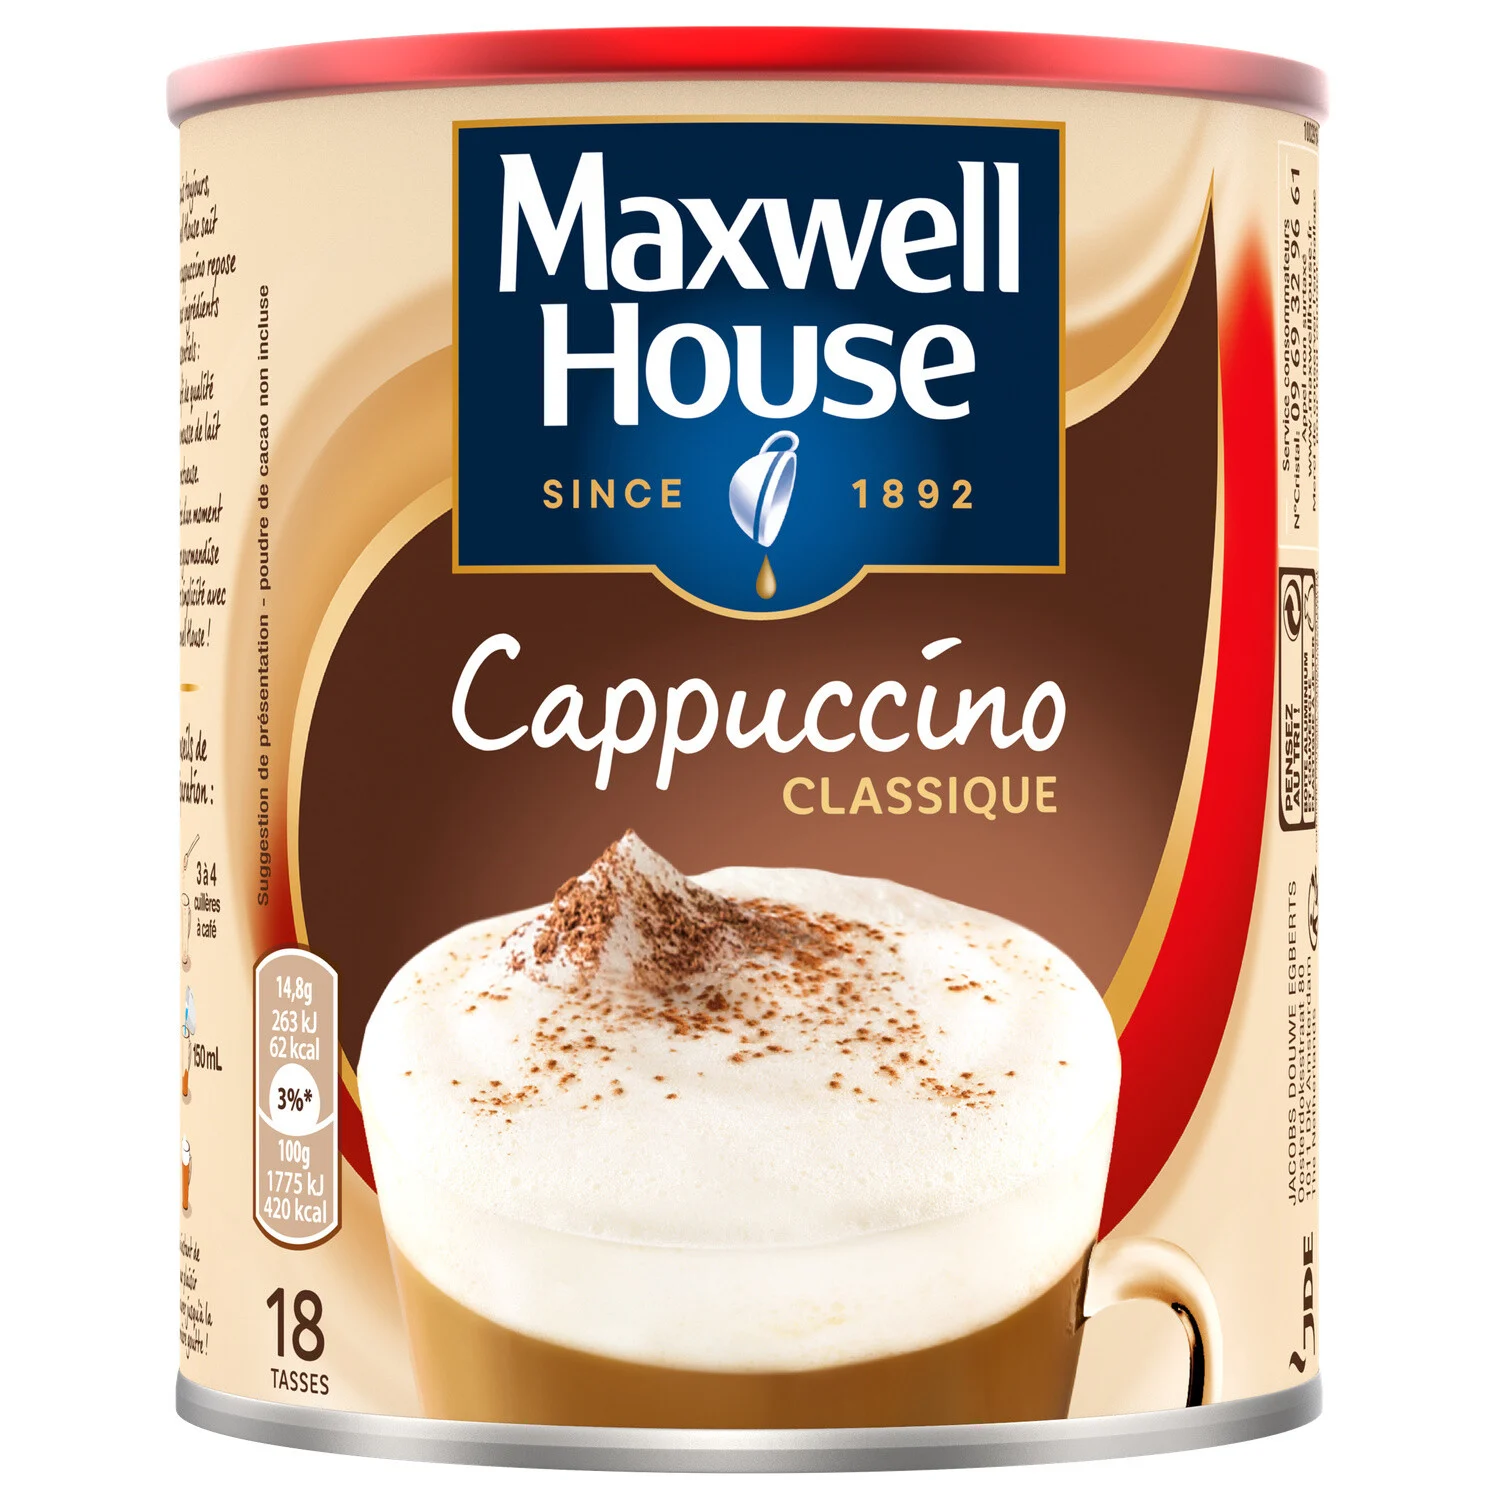 Cappuccino Classique 280g - Maxwell House